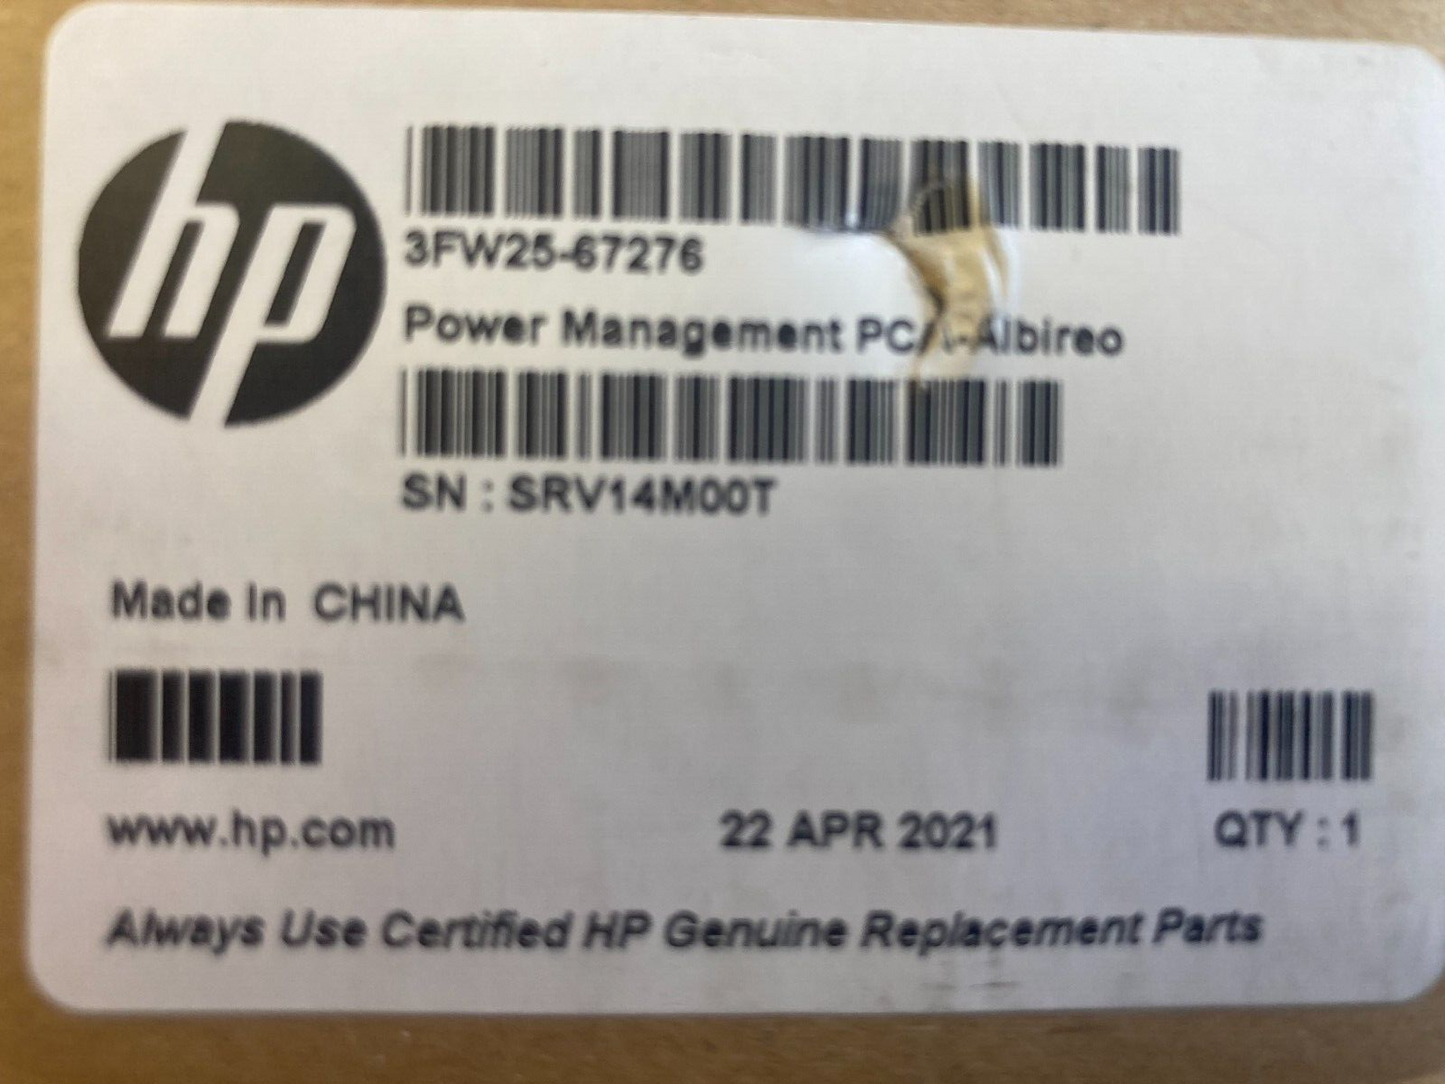 NEW HP 3FW25-67276  Deneb Albireo PCA SRV JET FUSION 5200 3D PRINTER